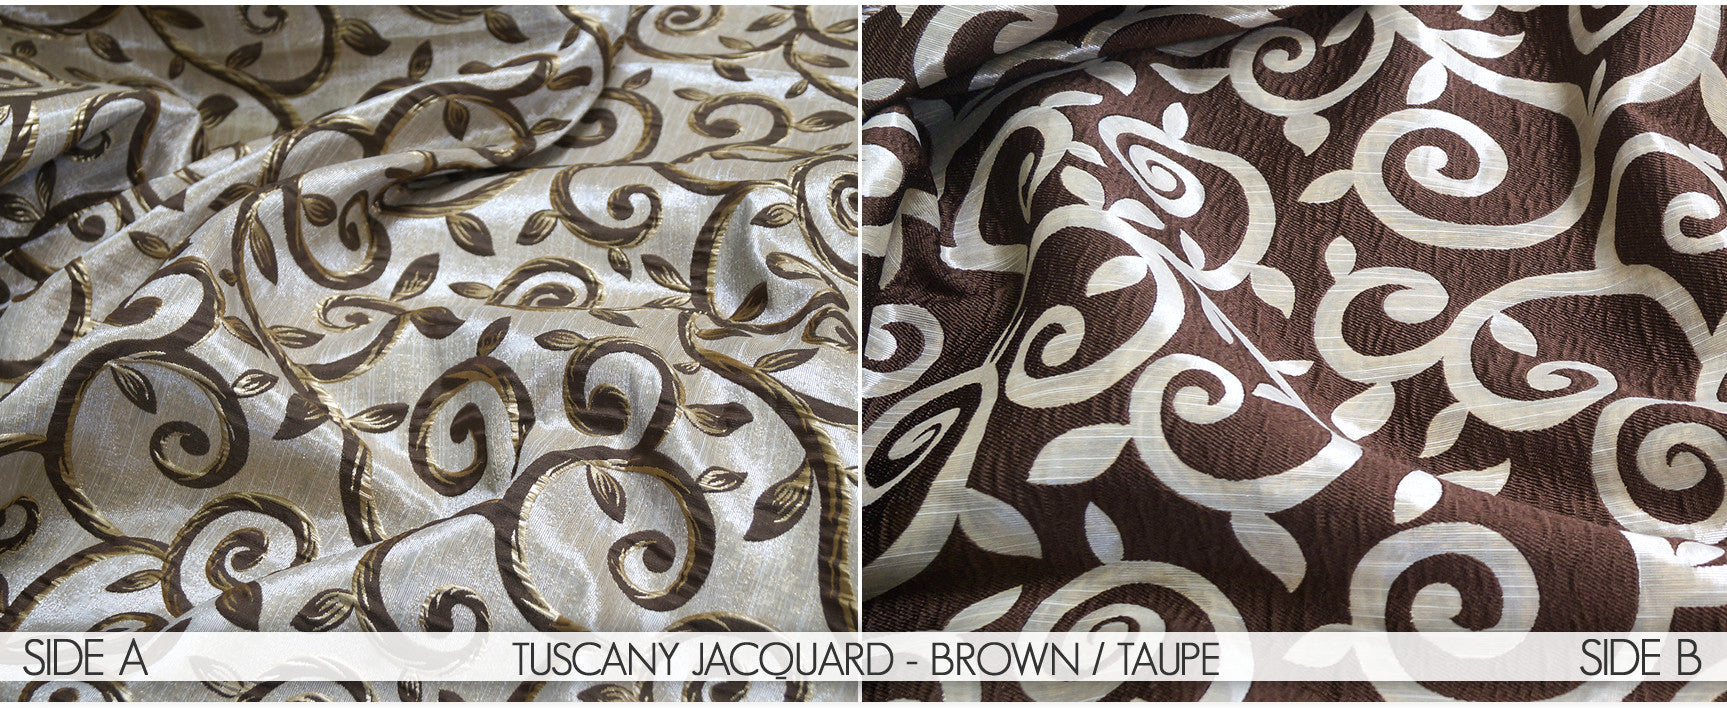 TUSCANY JACQUARD - BROWN / TAUPE